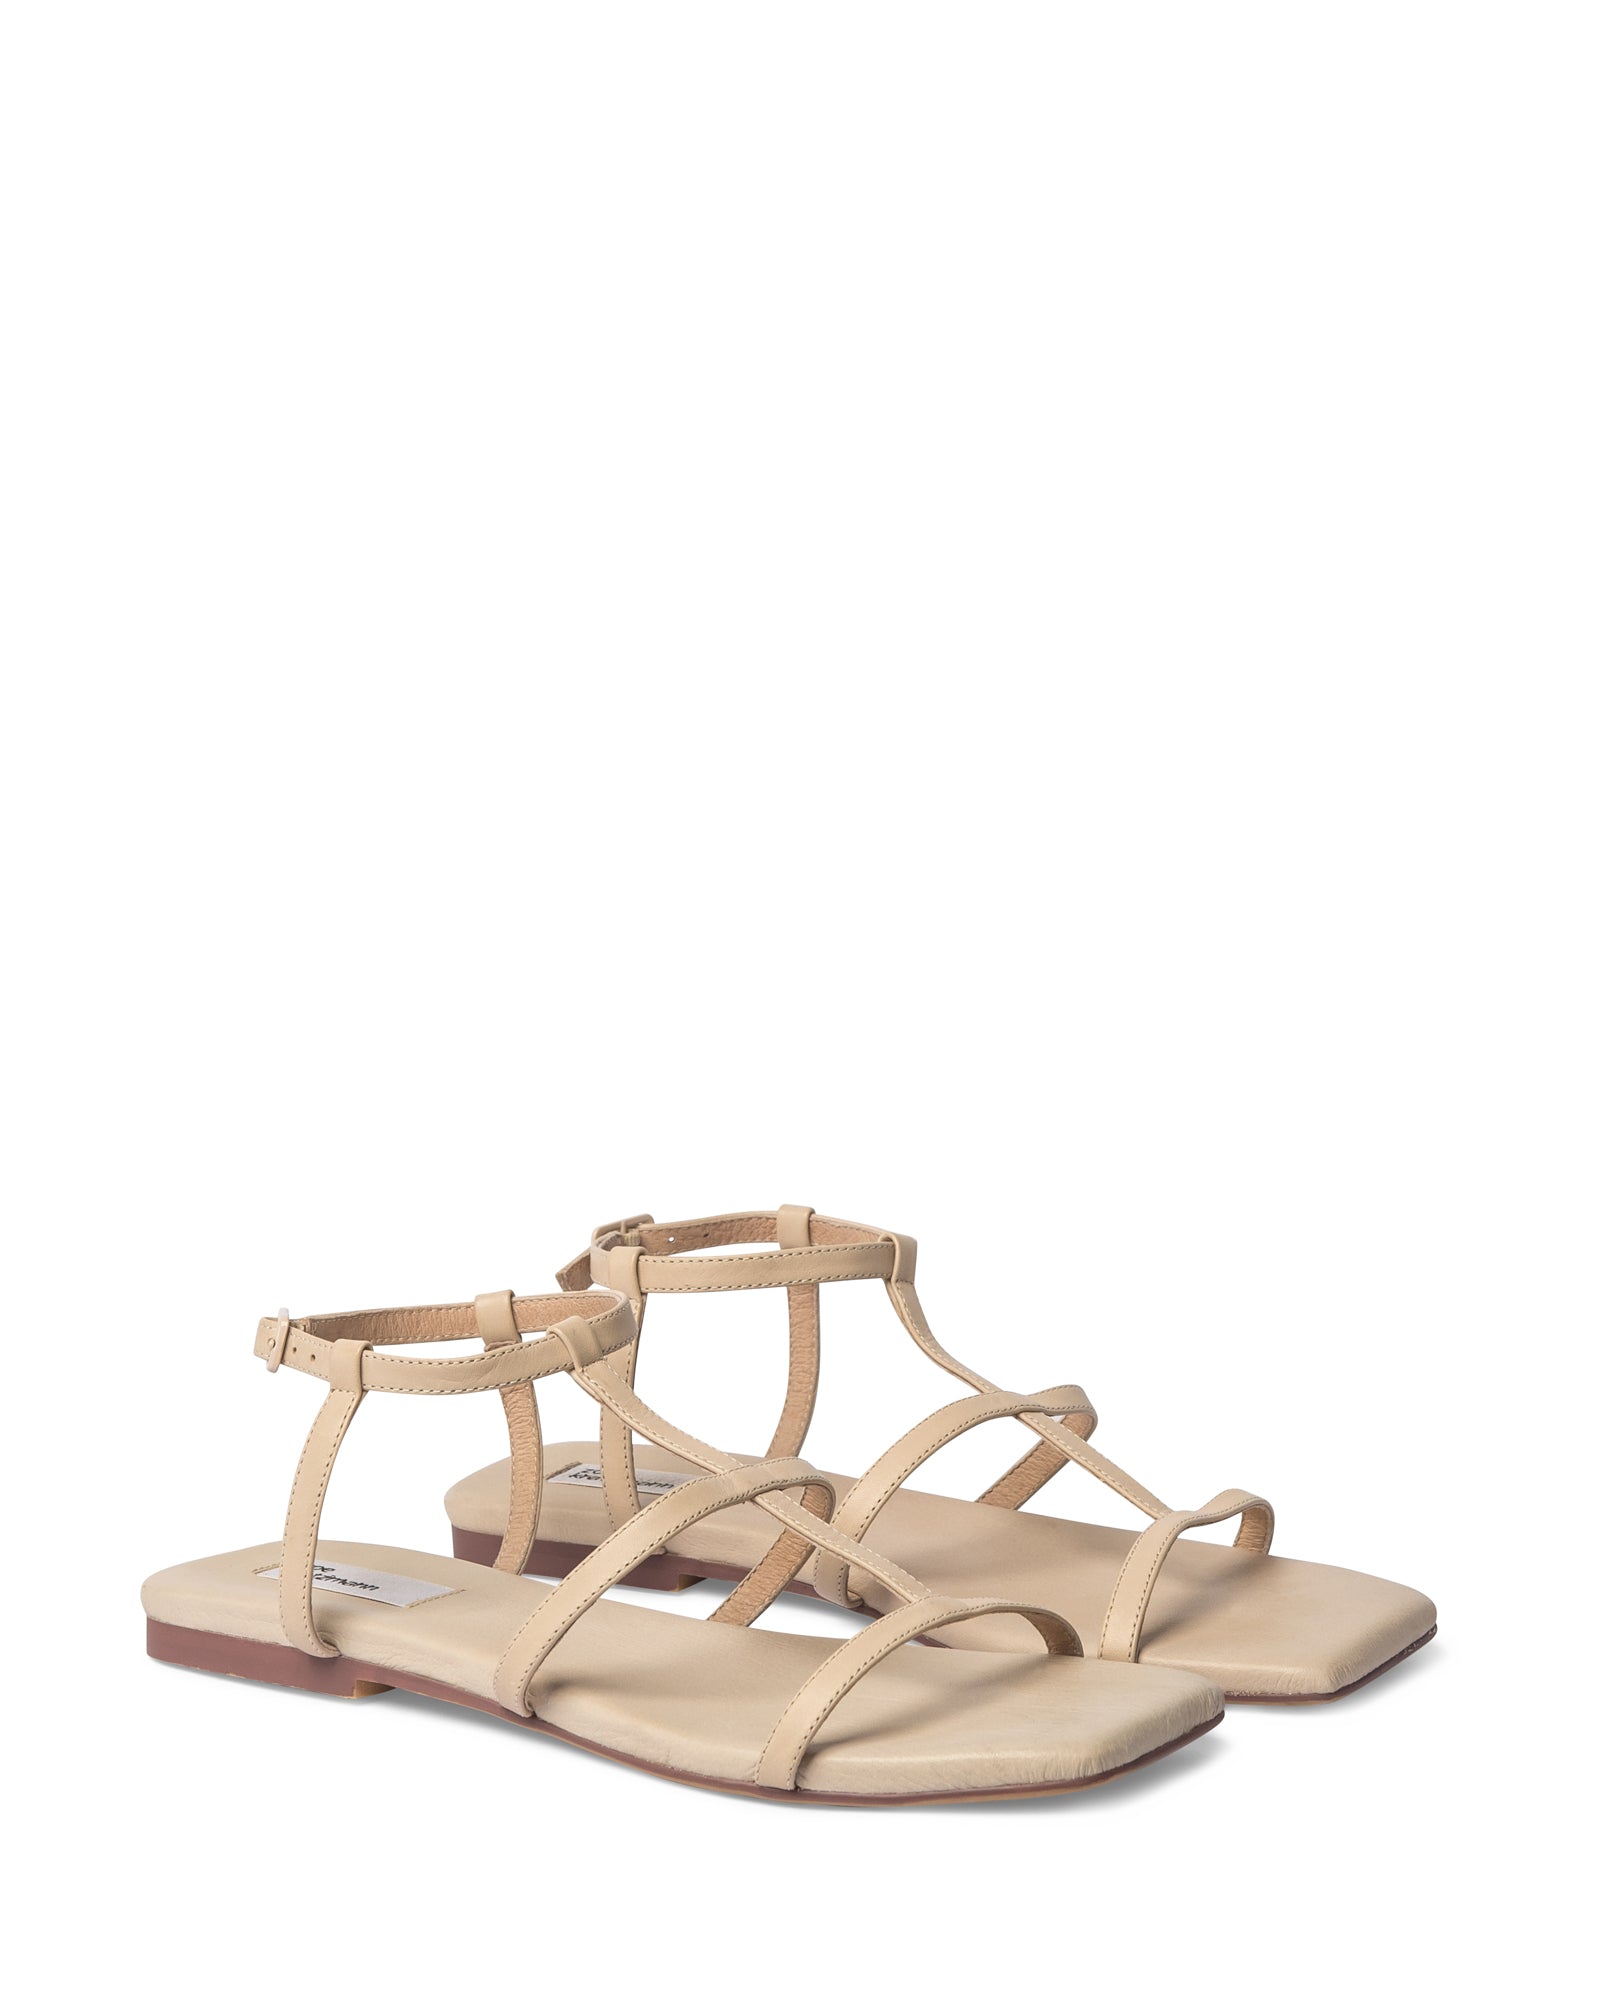 beige, sandal, squared toe shape, slim straps